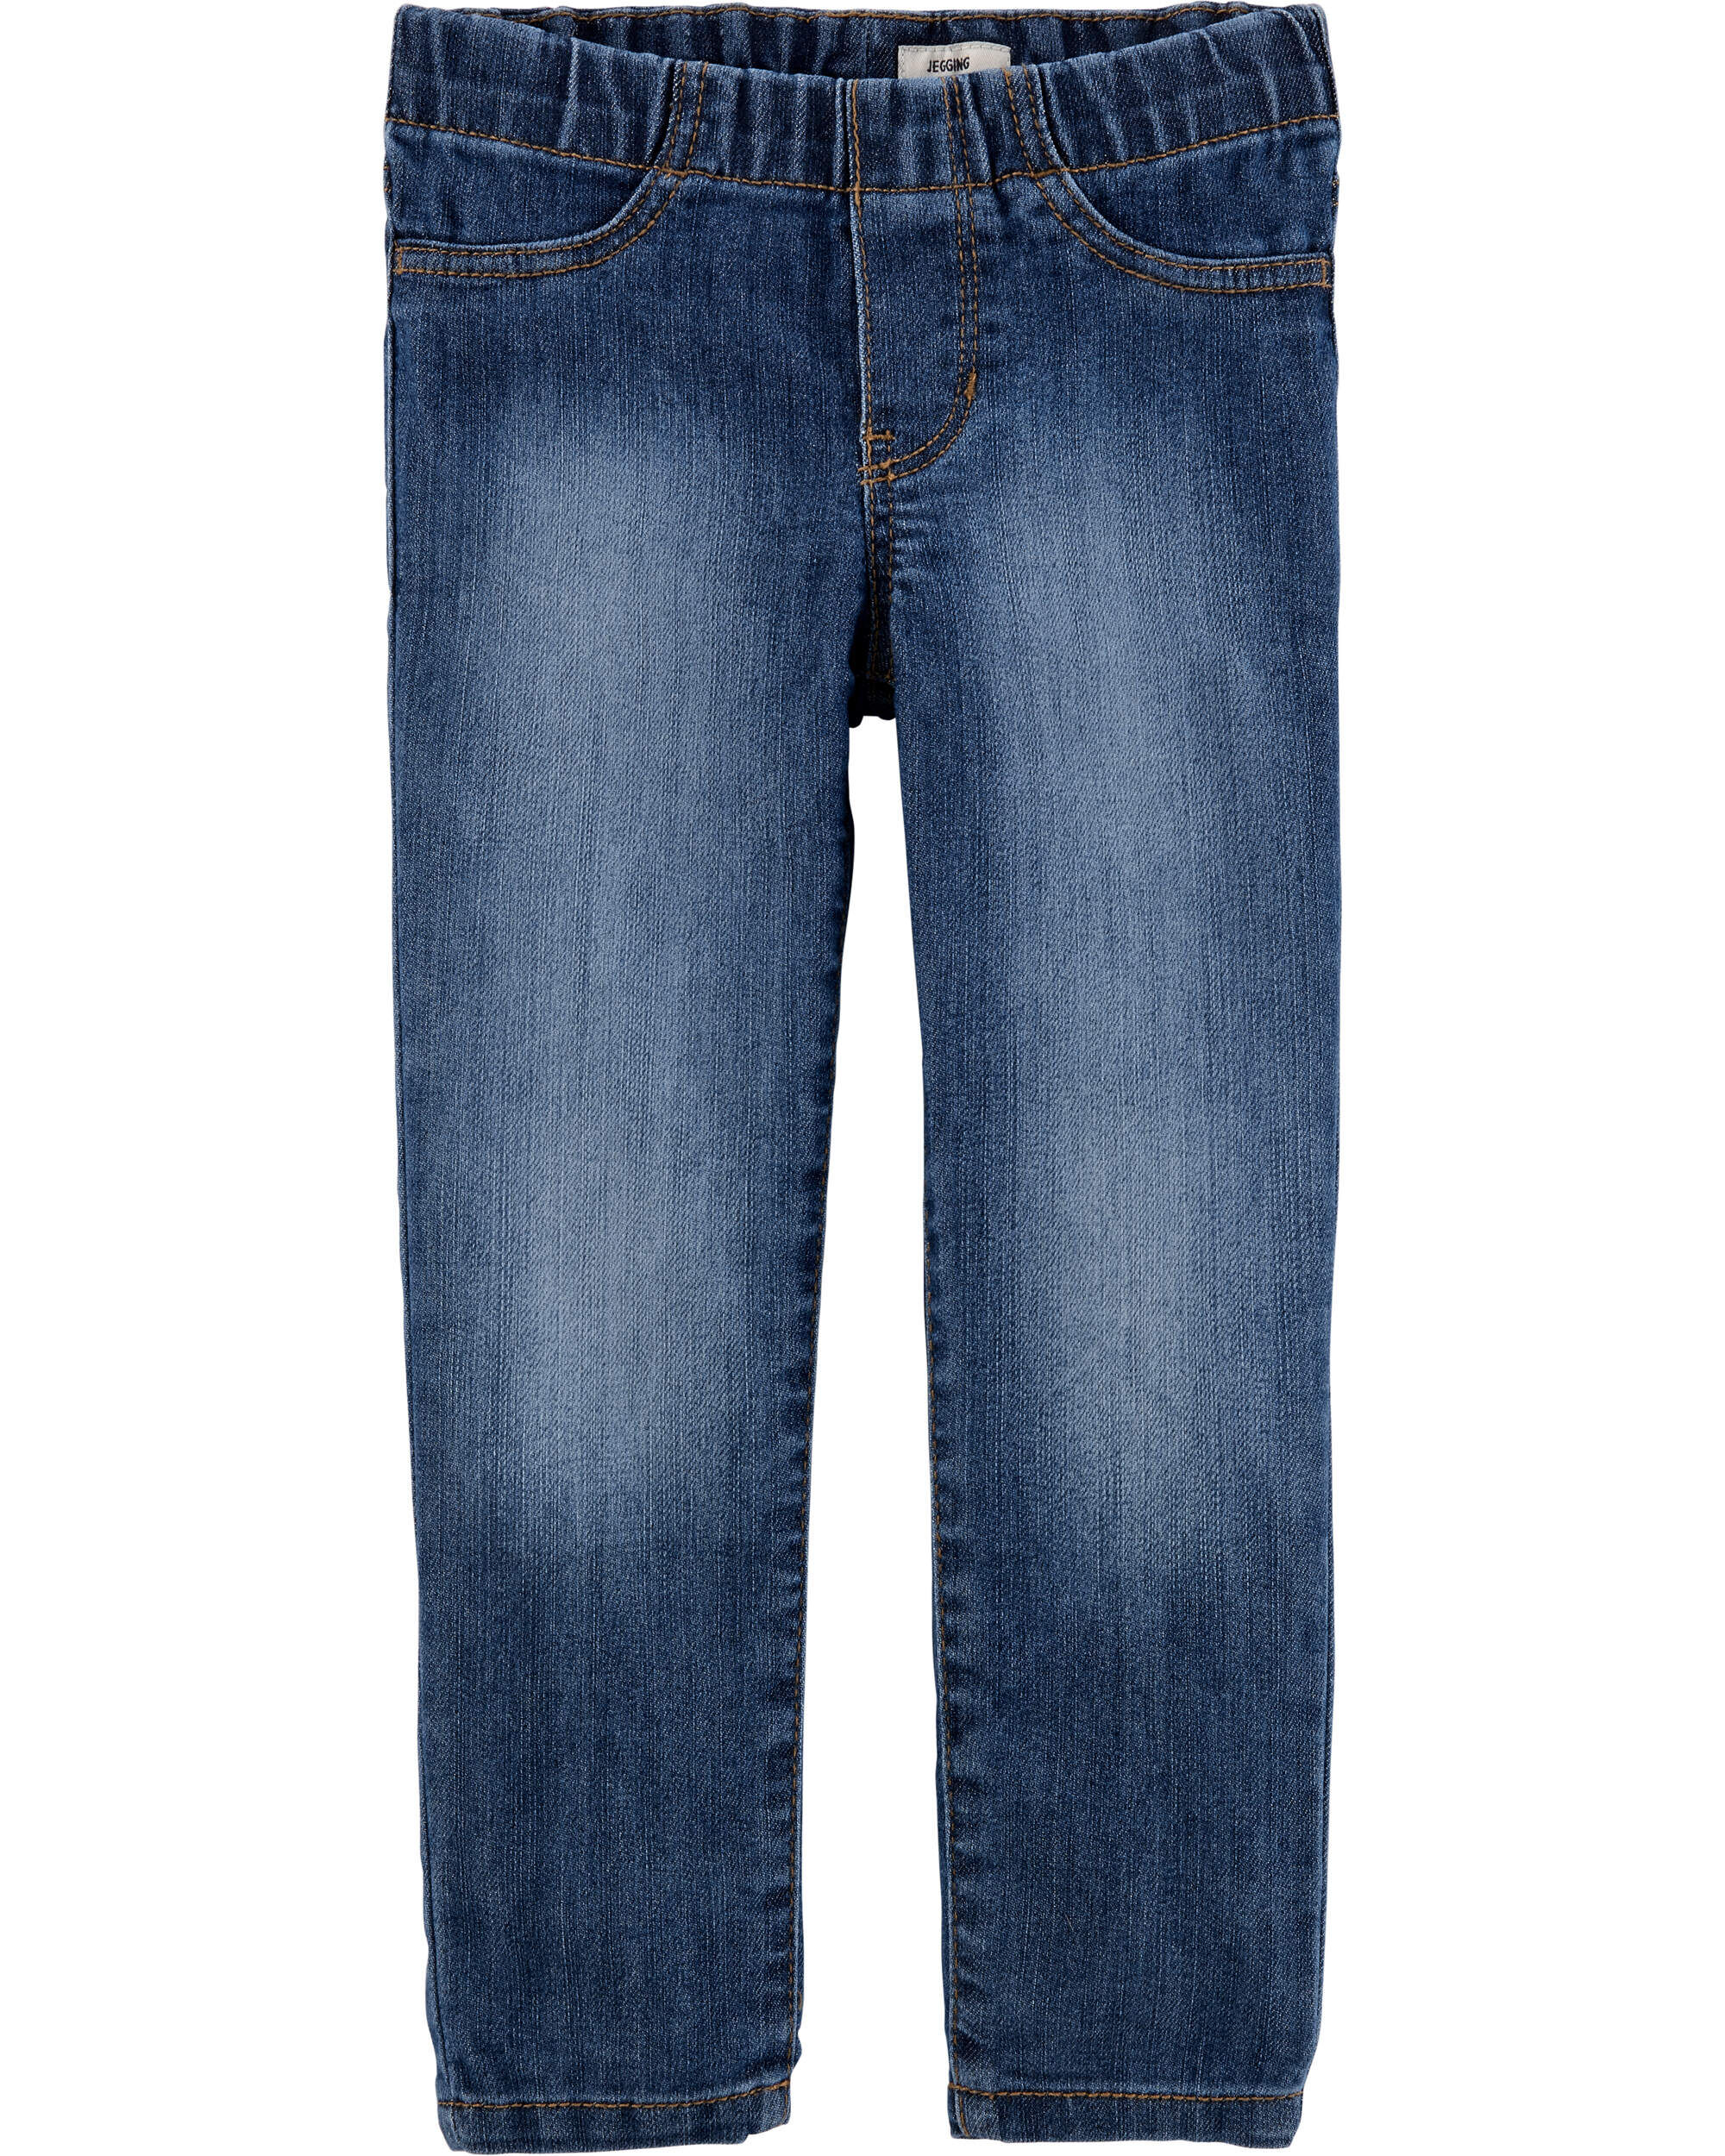 Toddler Girl Leggings & Pants: Jeans | Carter's | Free Shipping